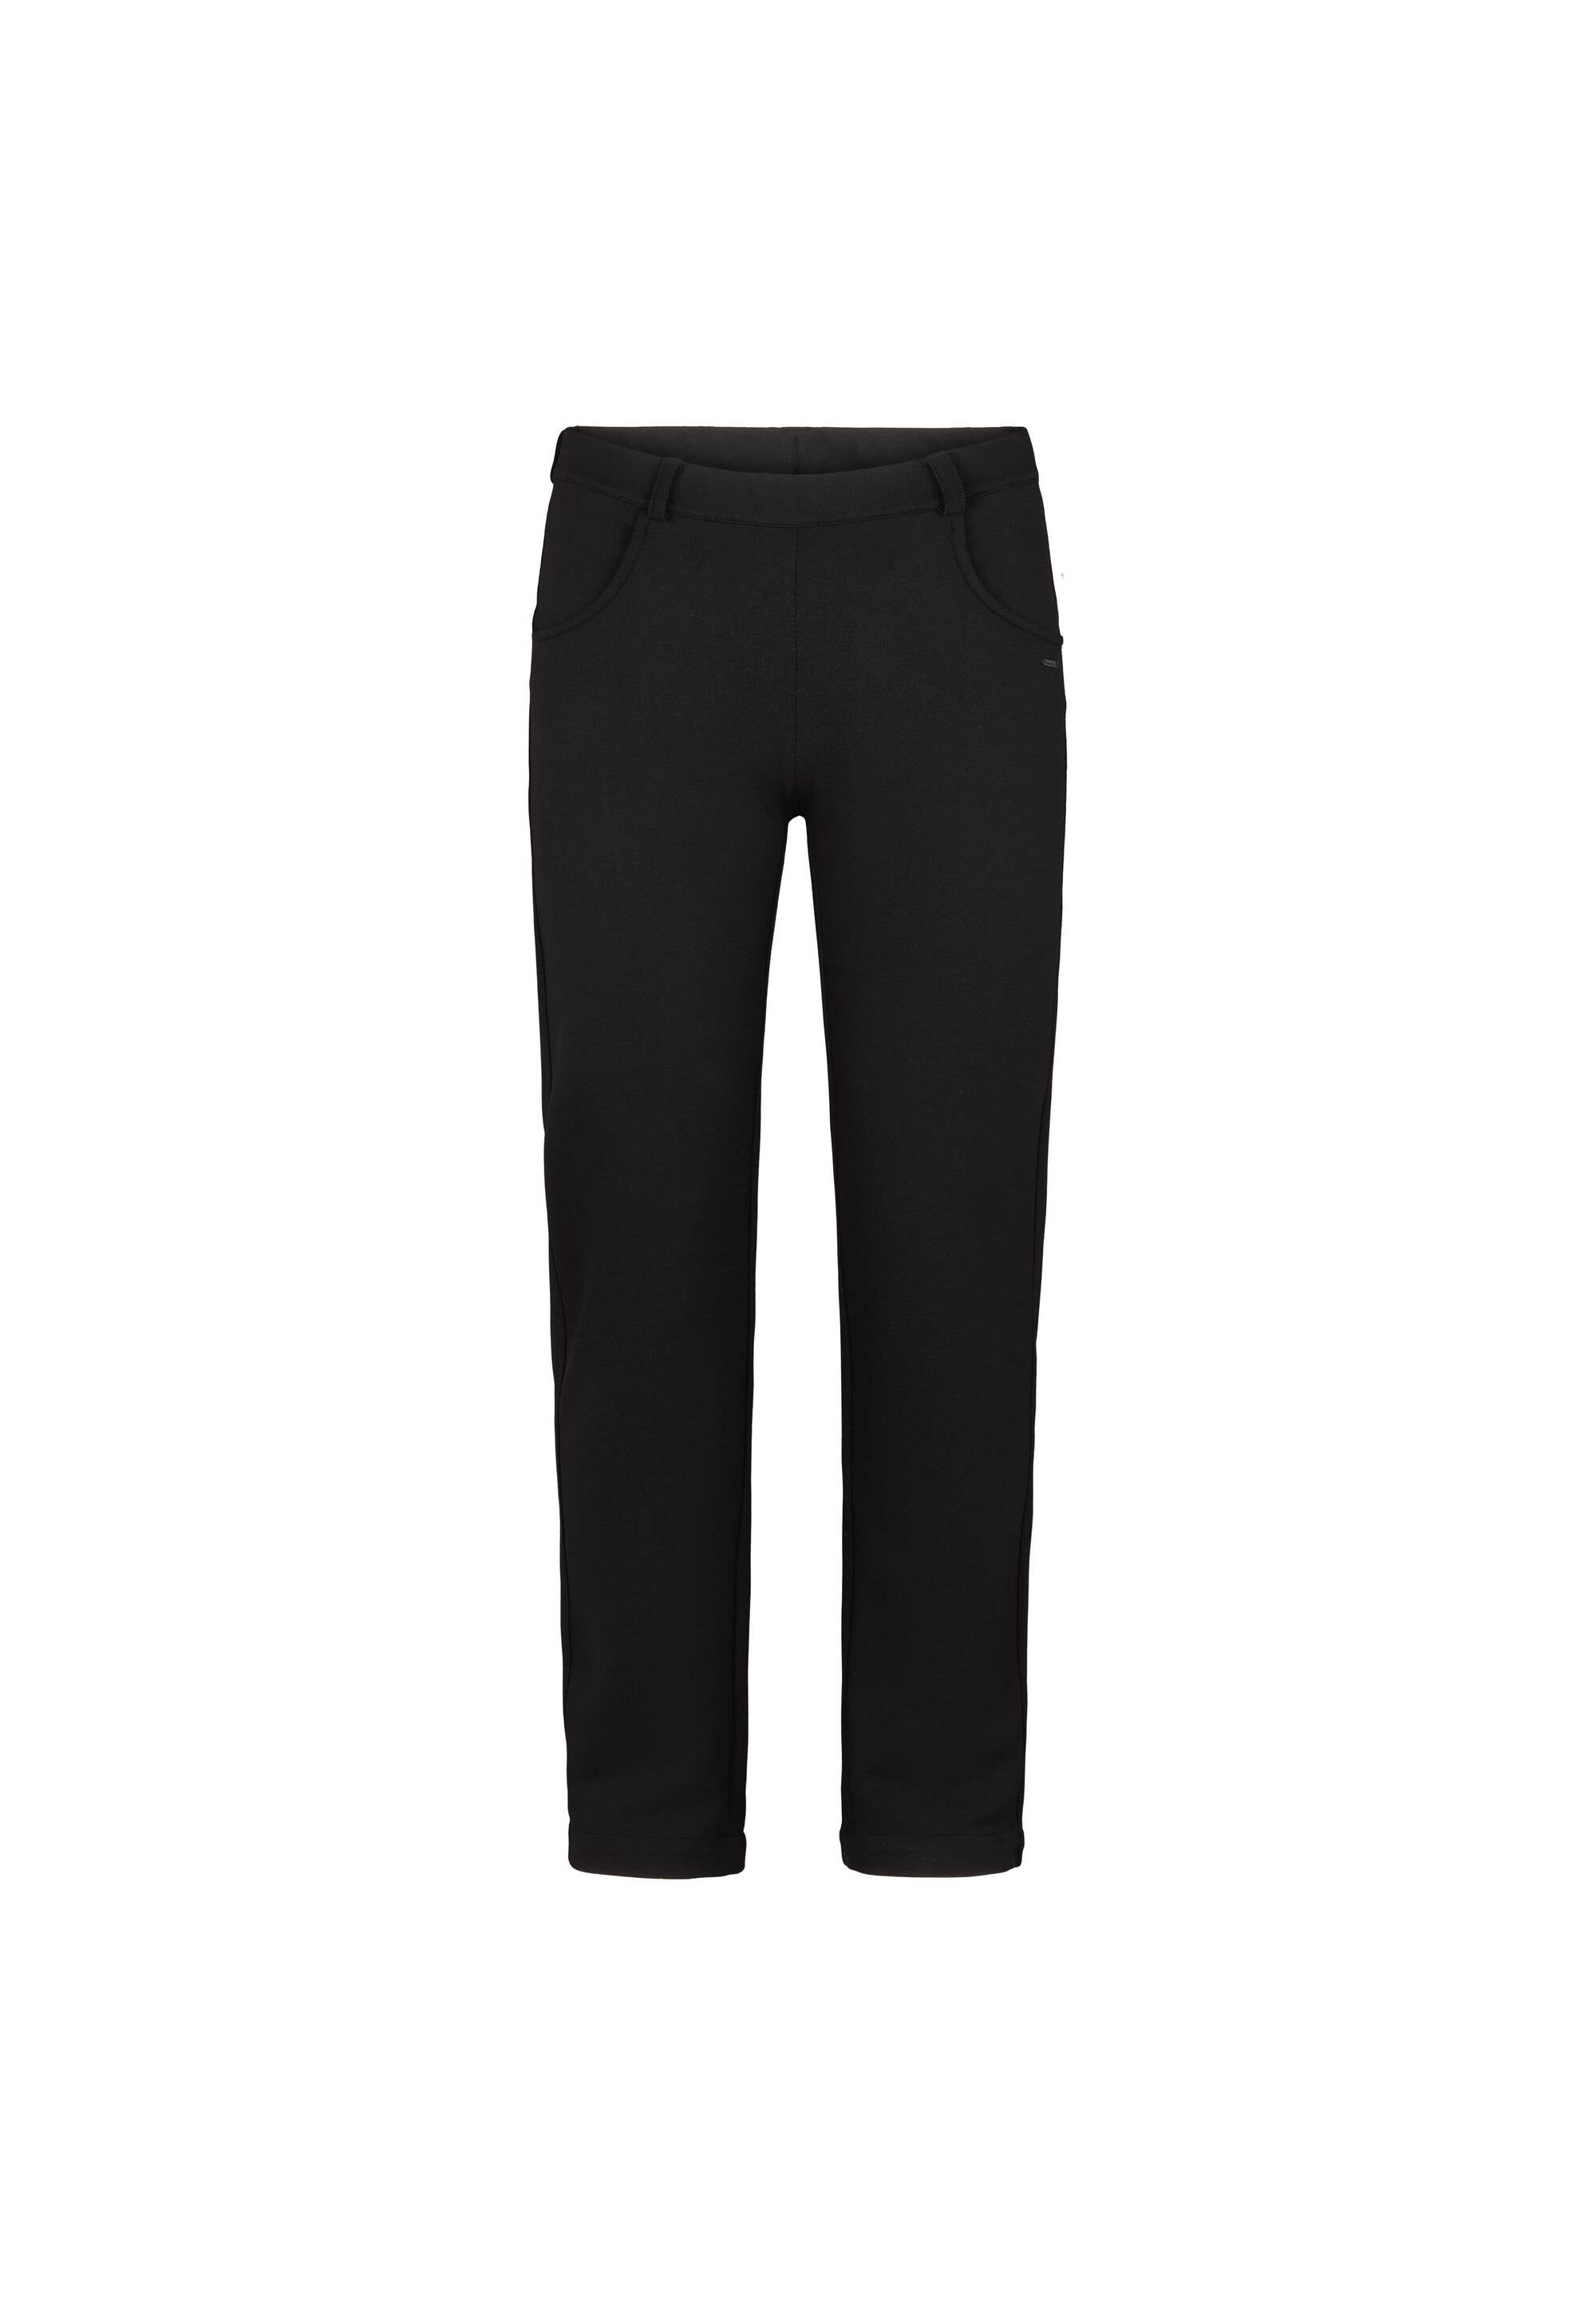 LAURIE Kelly Regular Jersey - Medium Length Trousers REGULAR 99147 Black